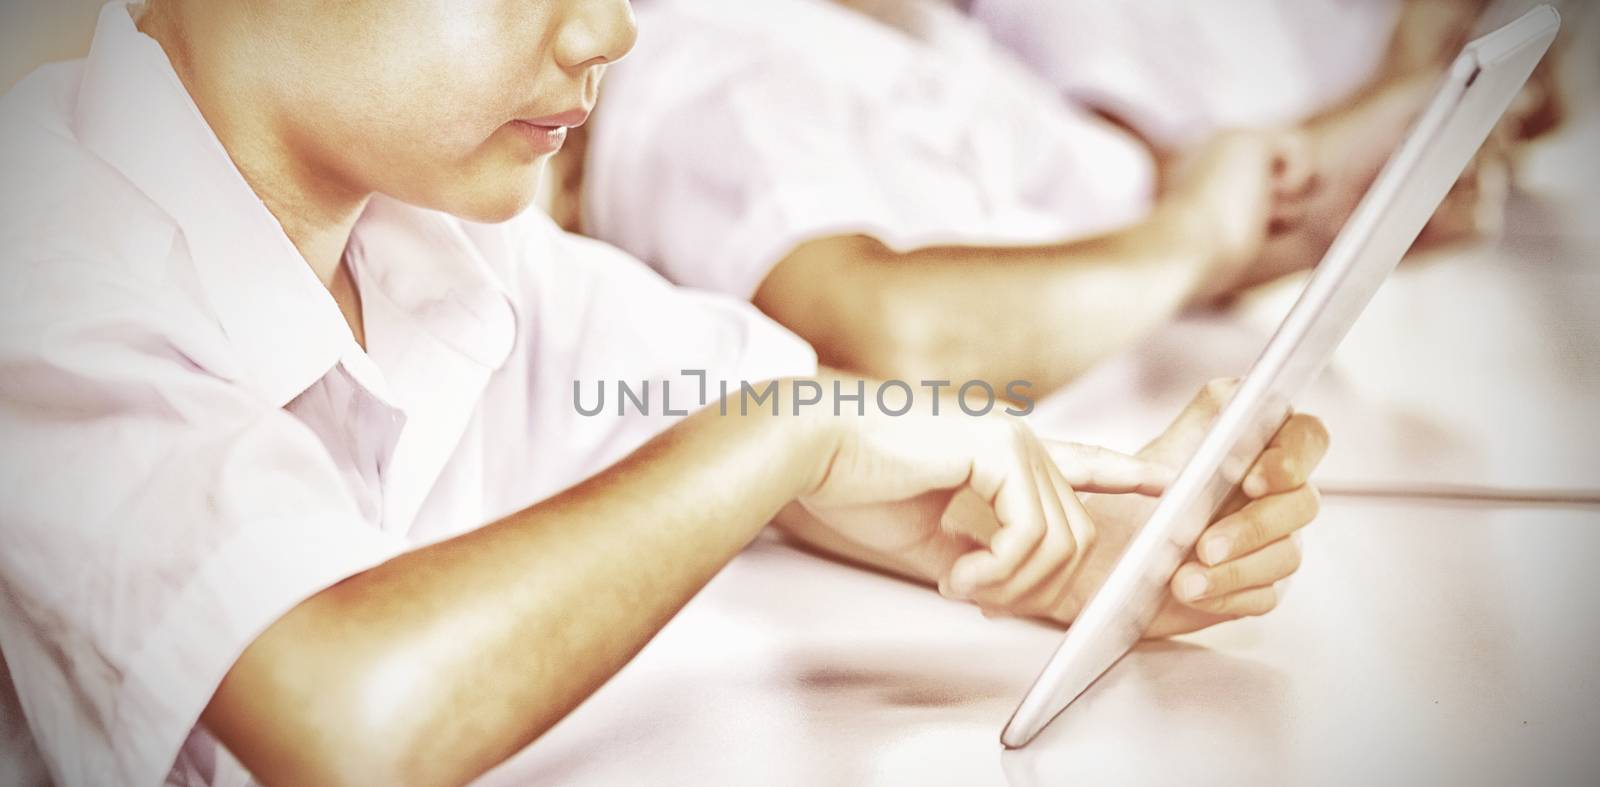 Kids using digital tablet in classroom at school